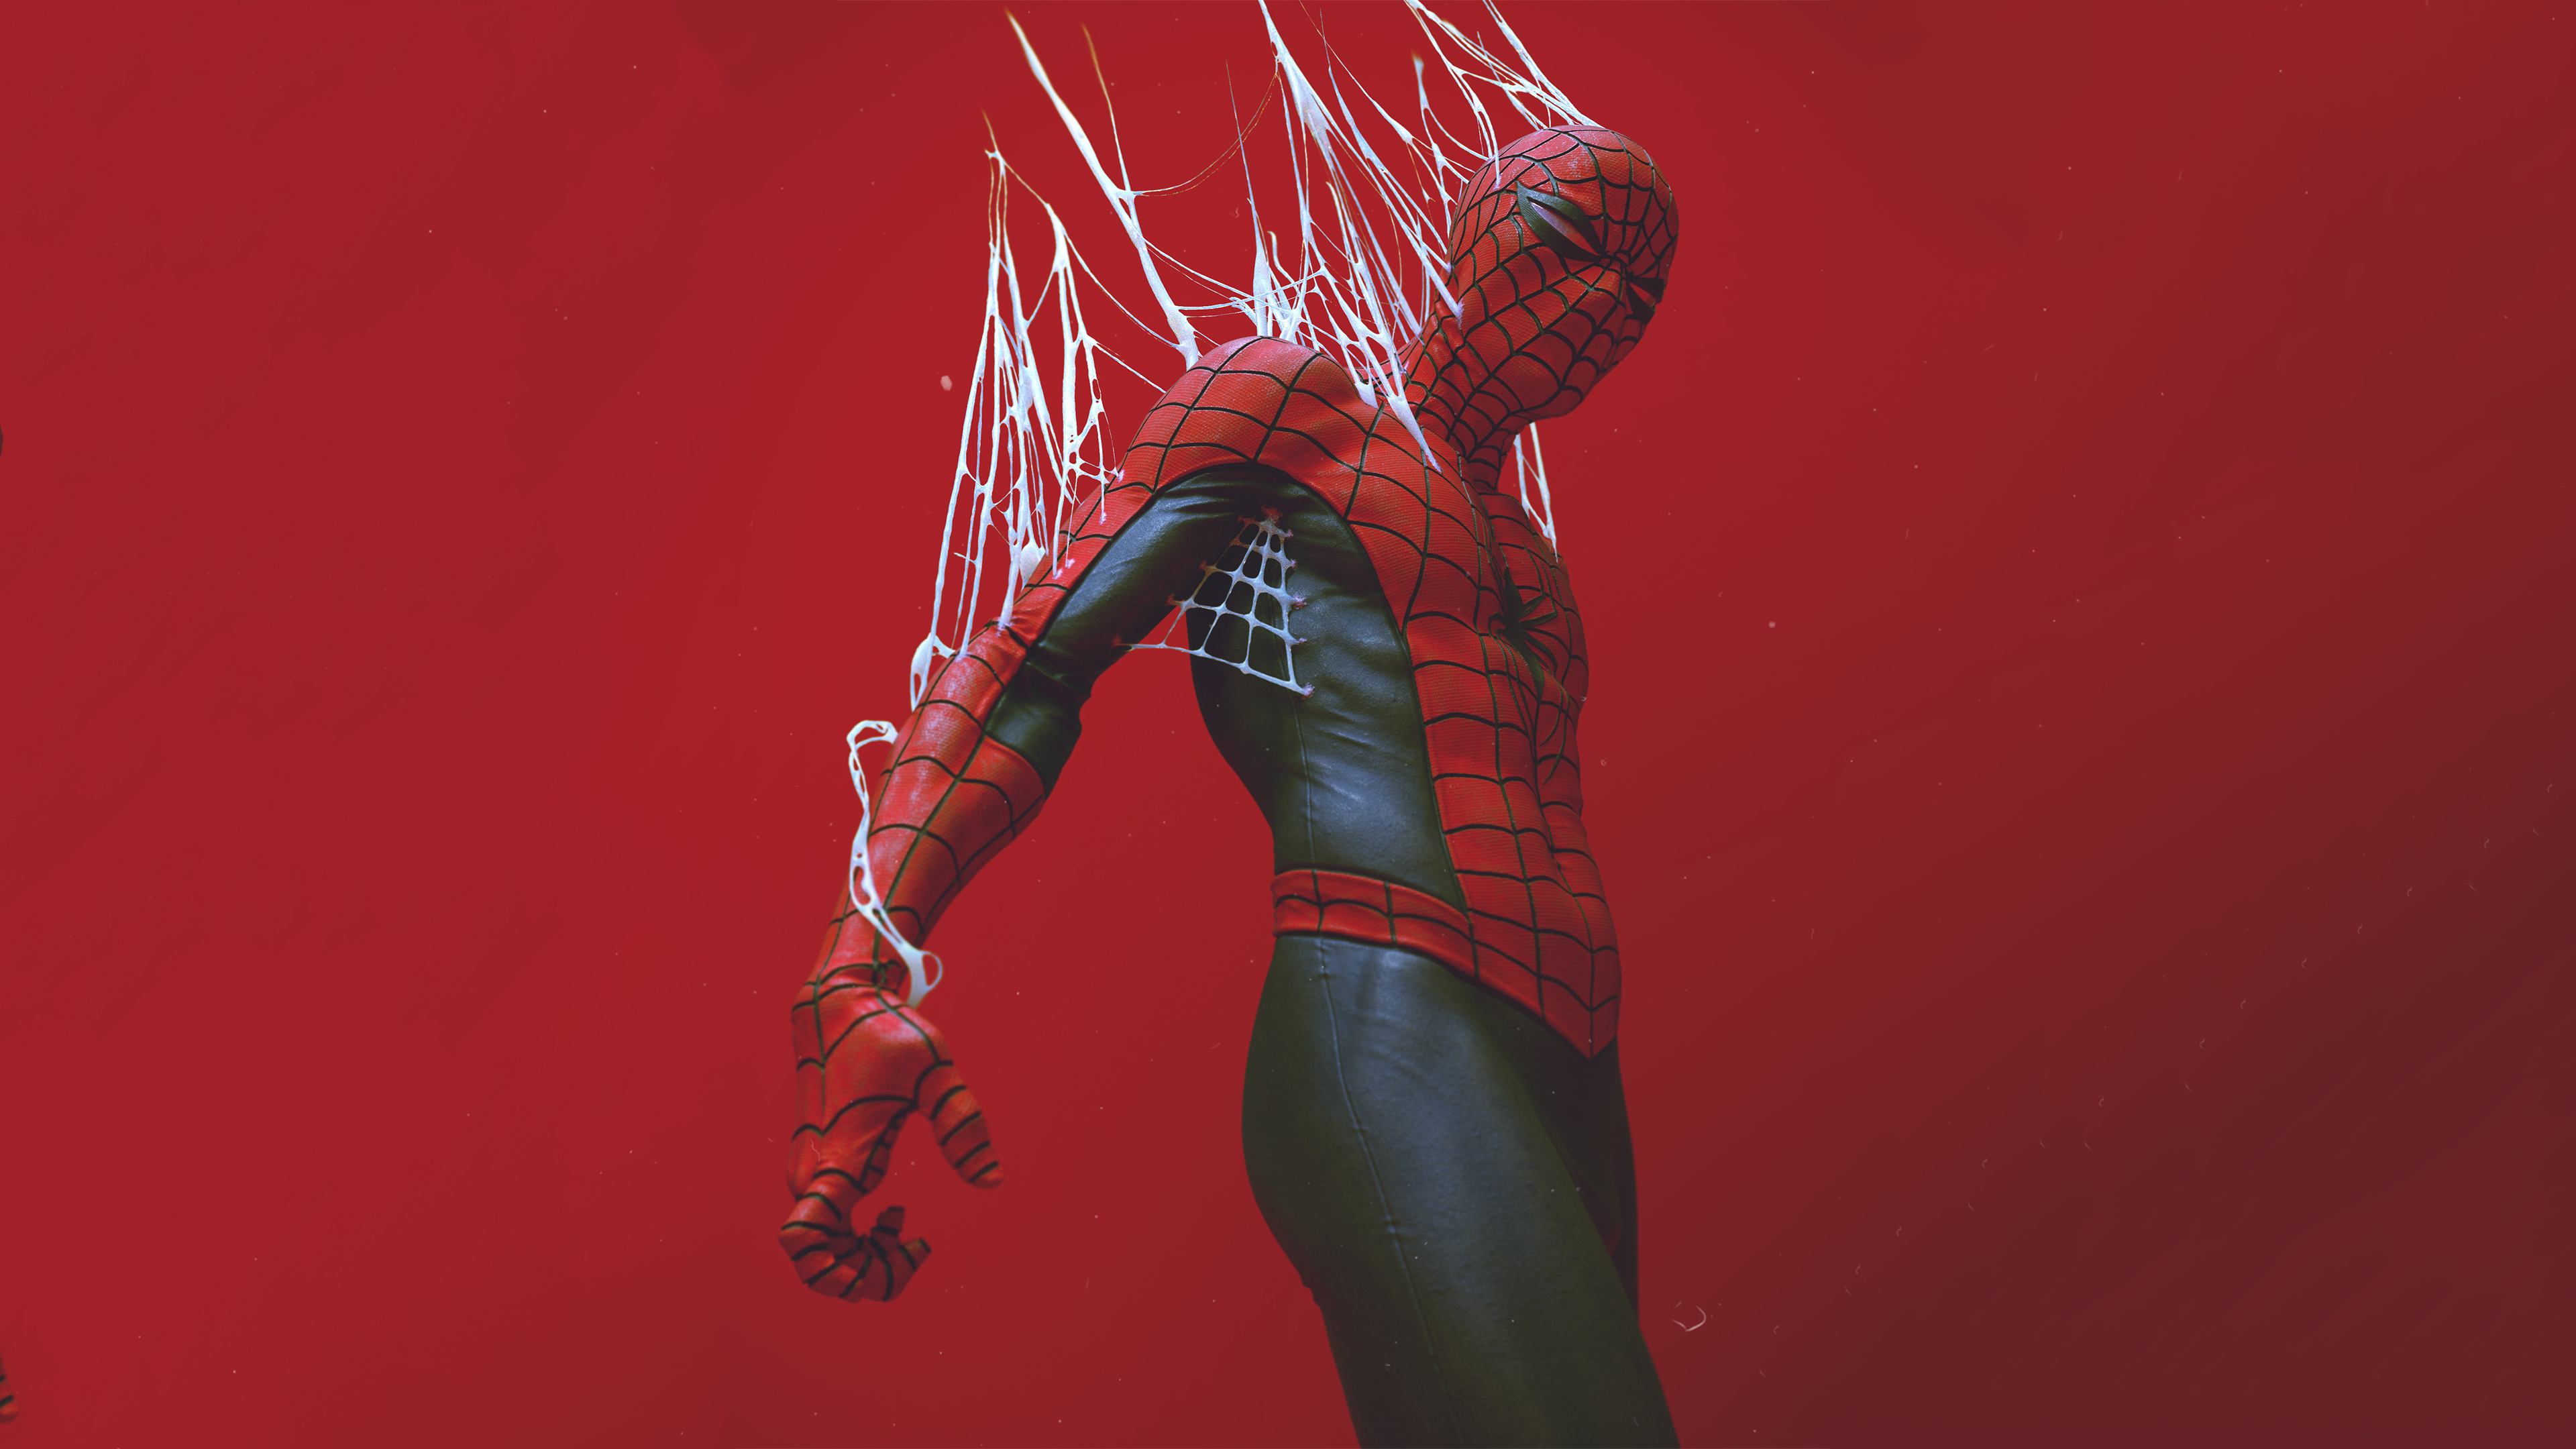 Spider-Man in the Web Digital Art Wallpaper, HD Superheroes 4K